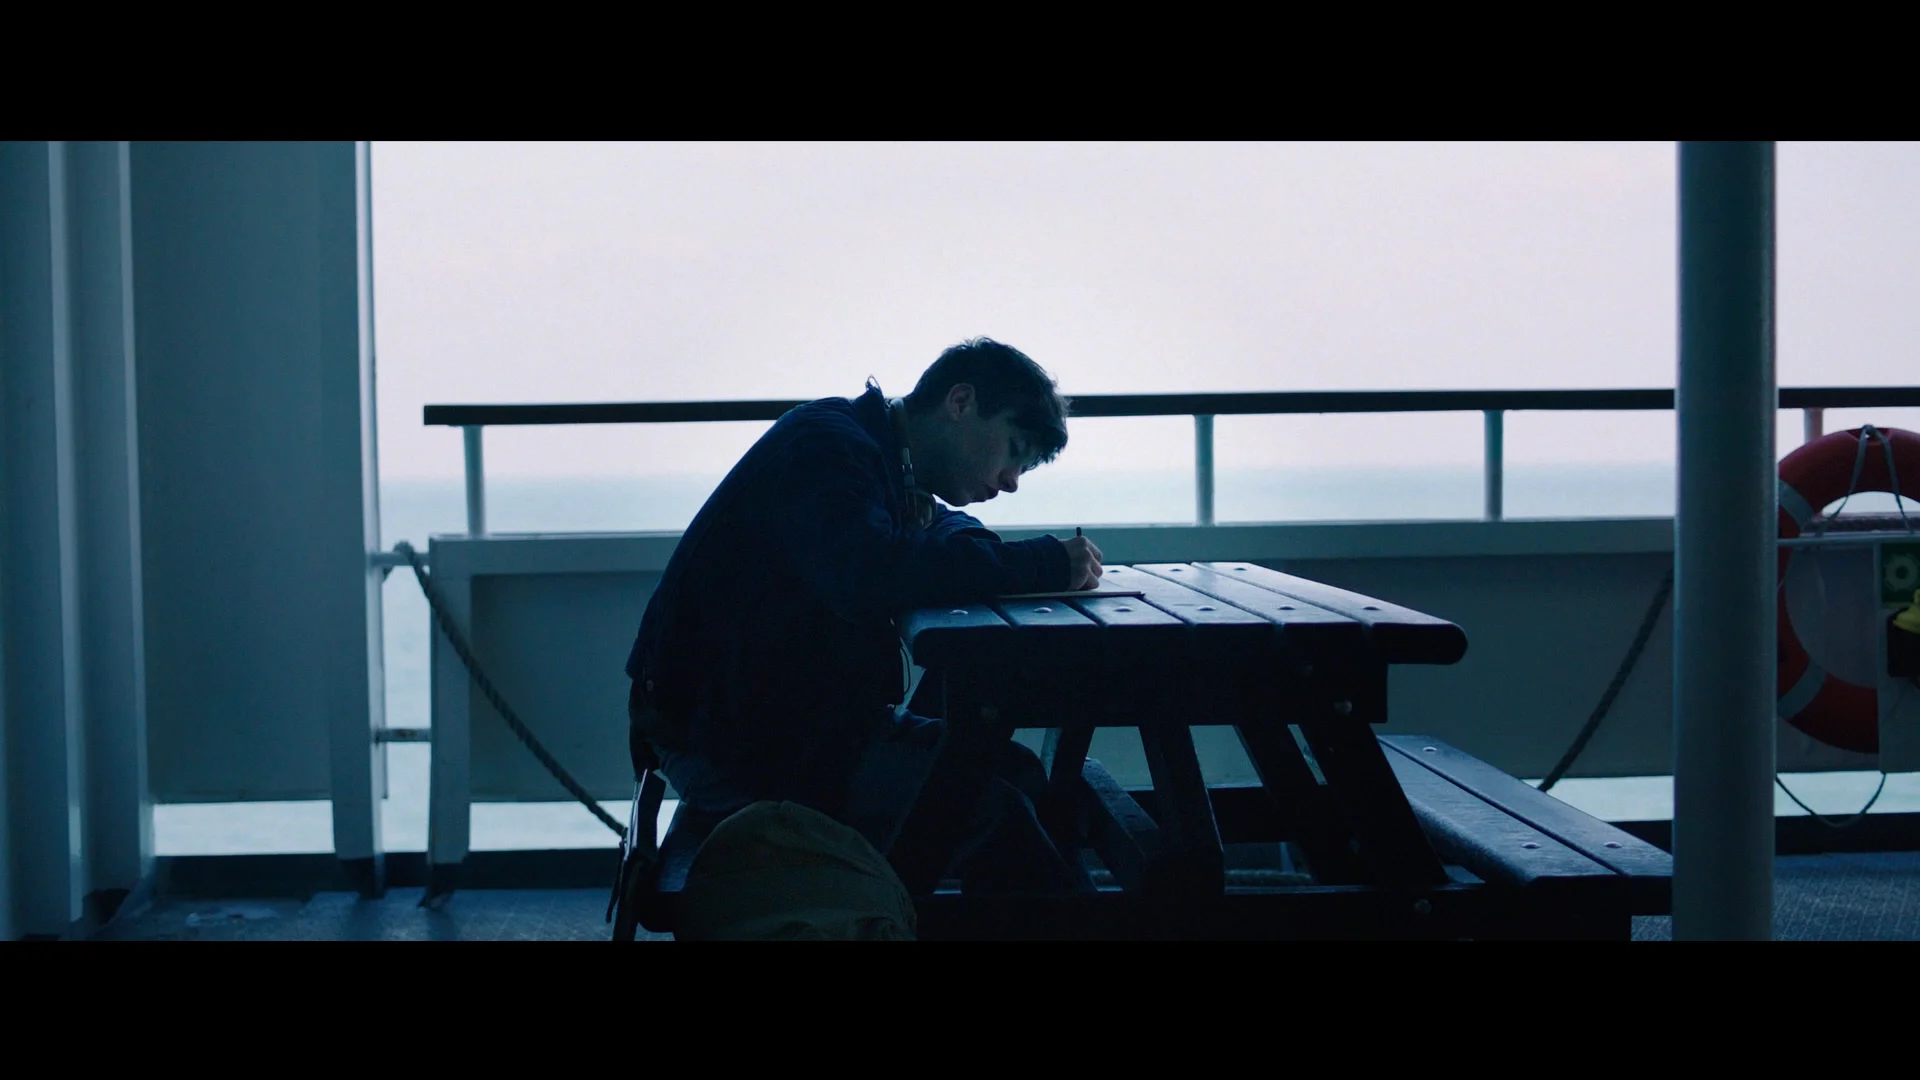 Light Thereafter - A film by Konstantin Bojanov - Trailer on Vimeo